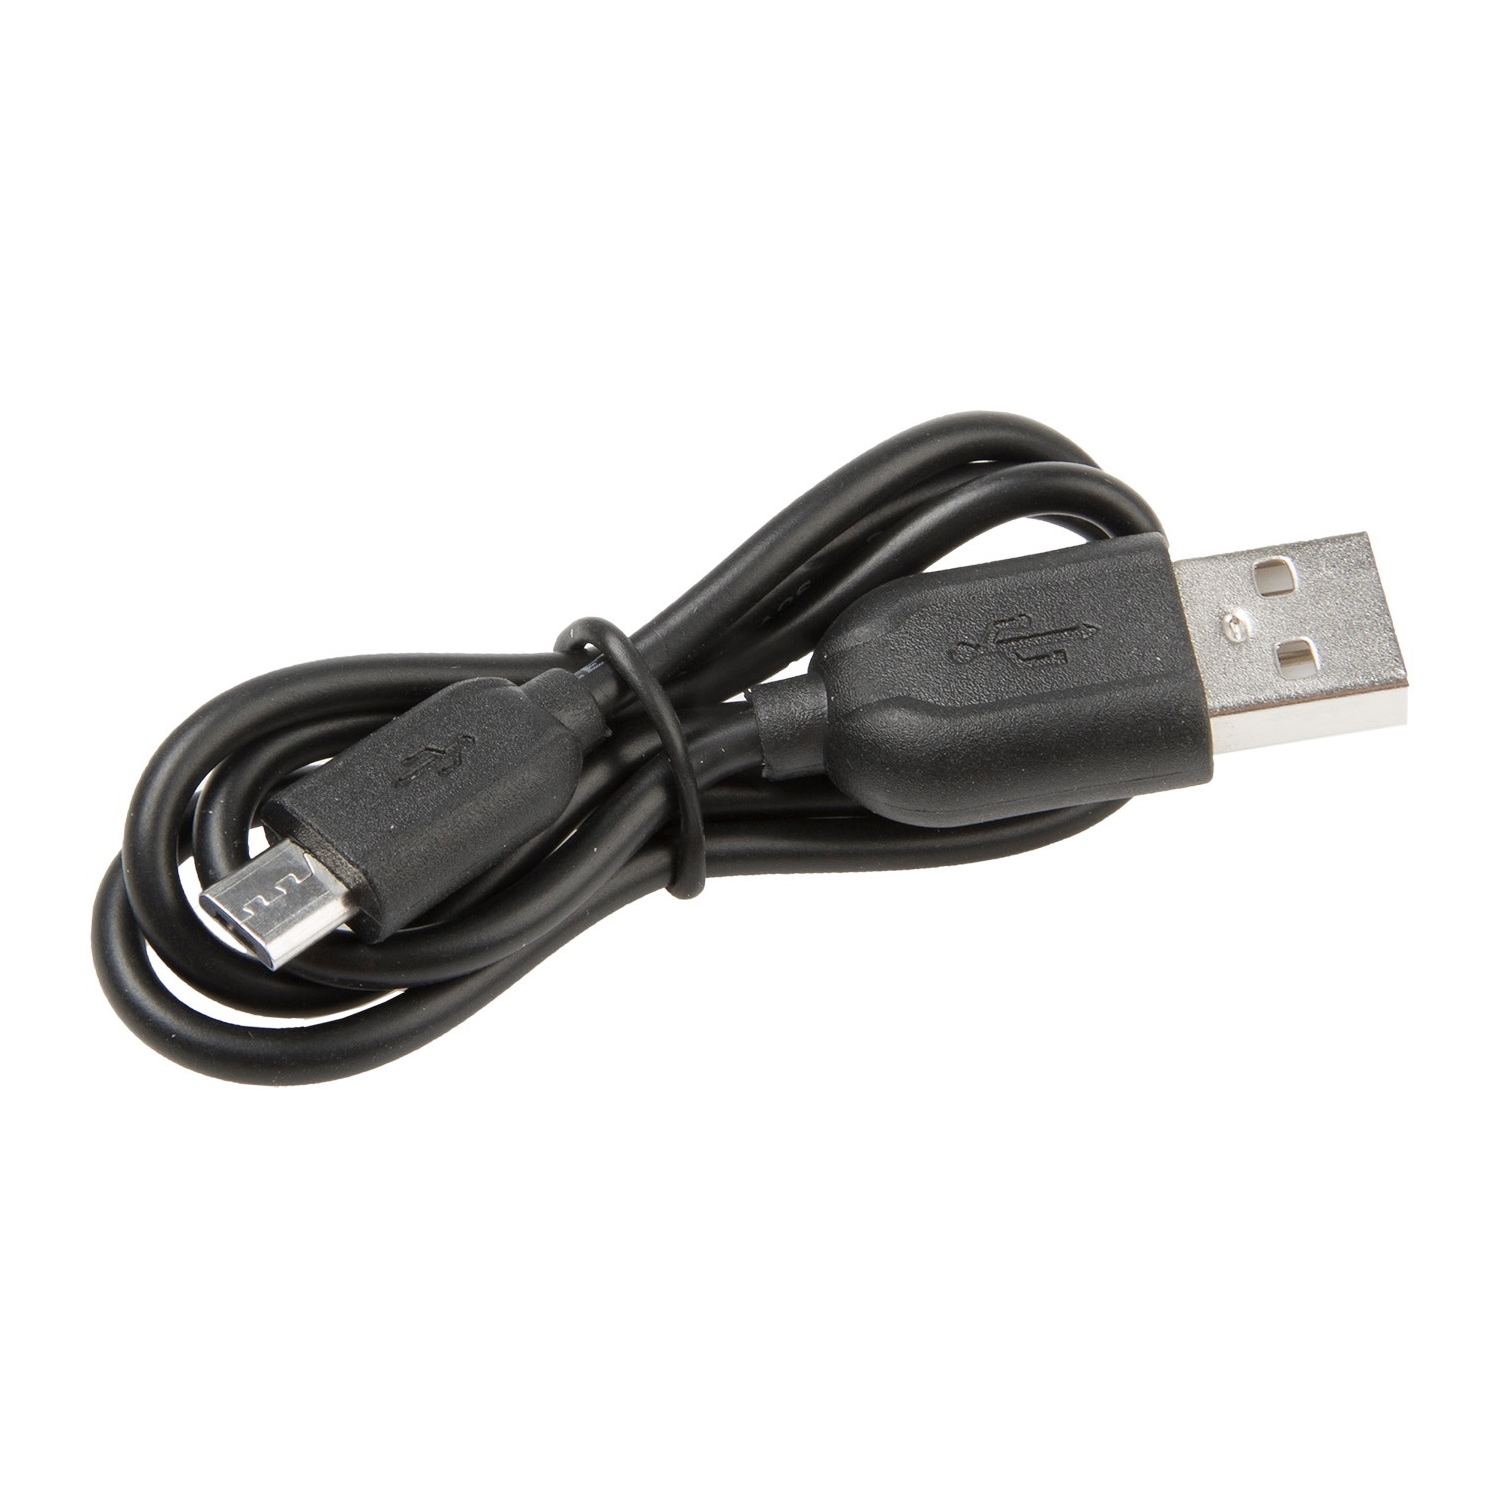 SMART-Lampe SUBURB 800 Lumen USB in schwarz/silber